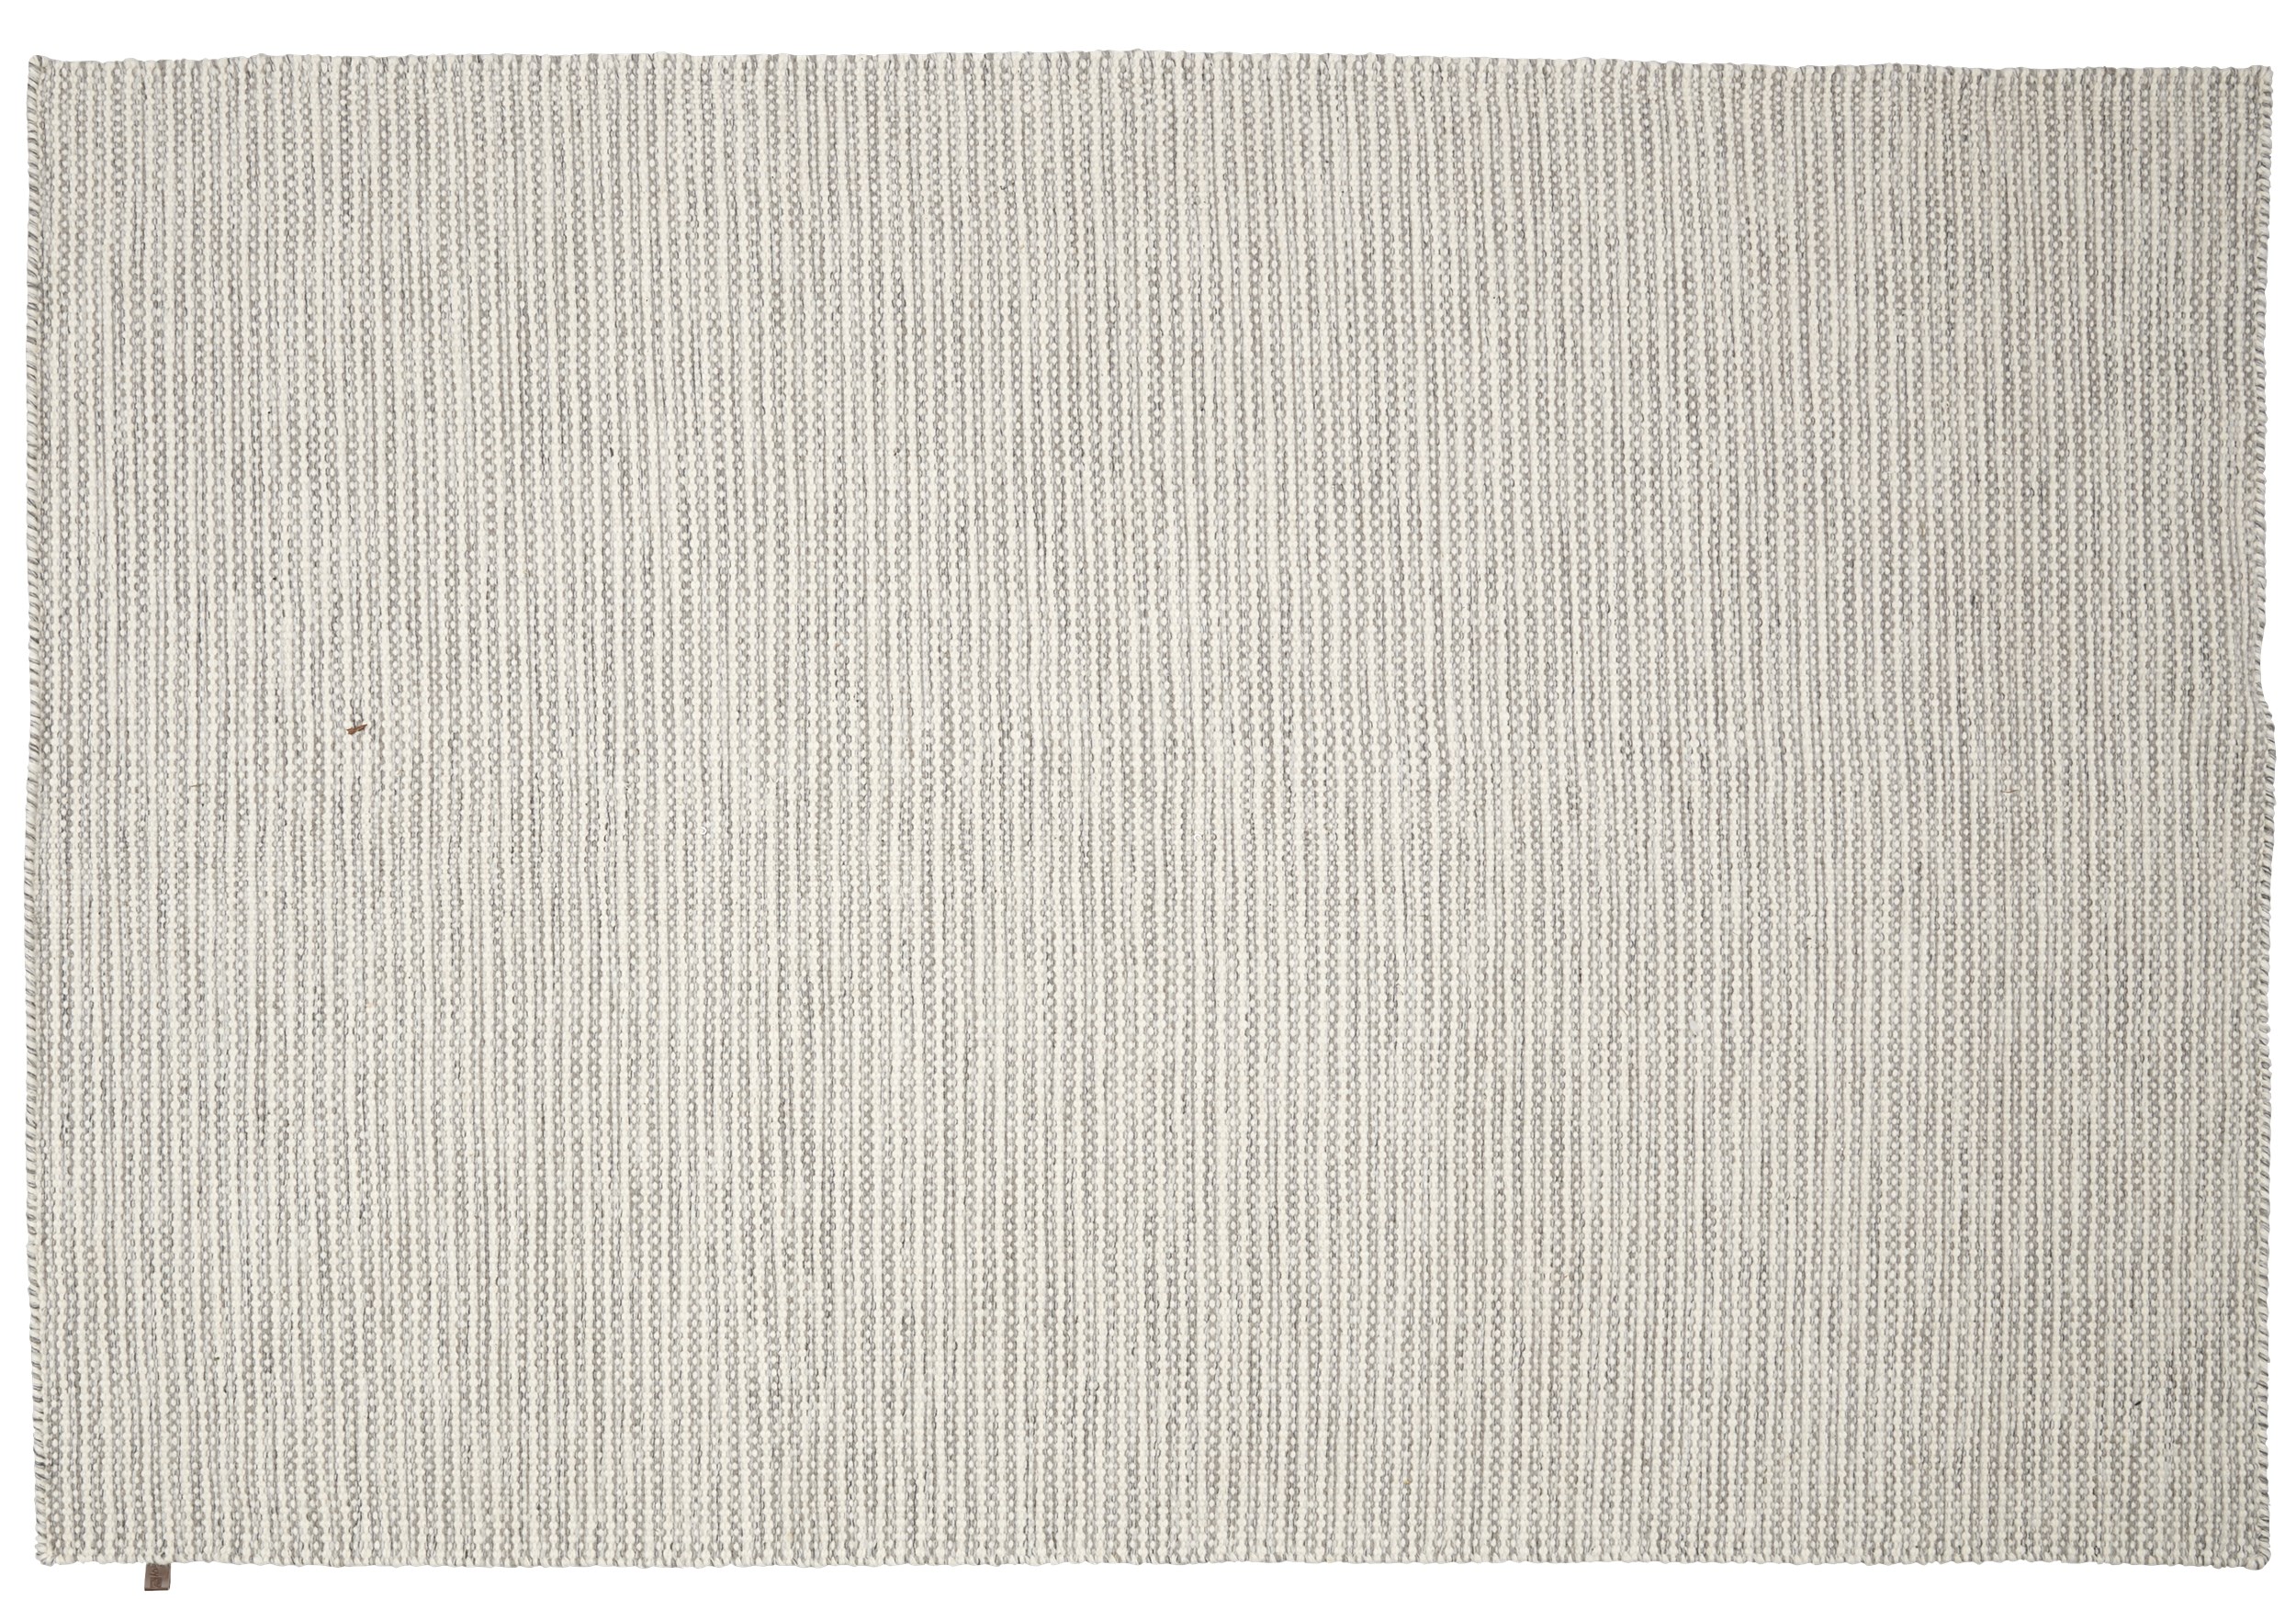 Pilas Kelimmatta 190 x 290 cm - Ull i offwhite/grå